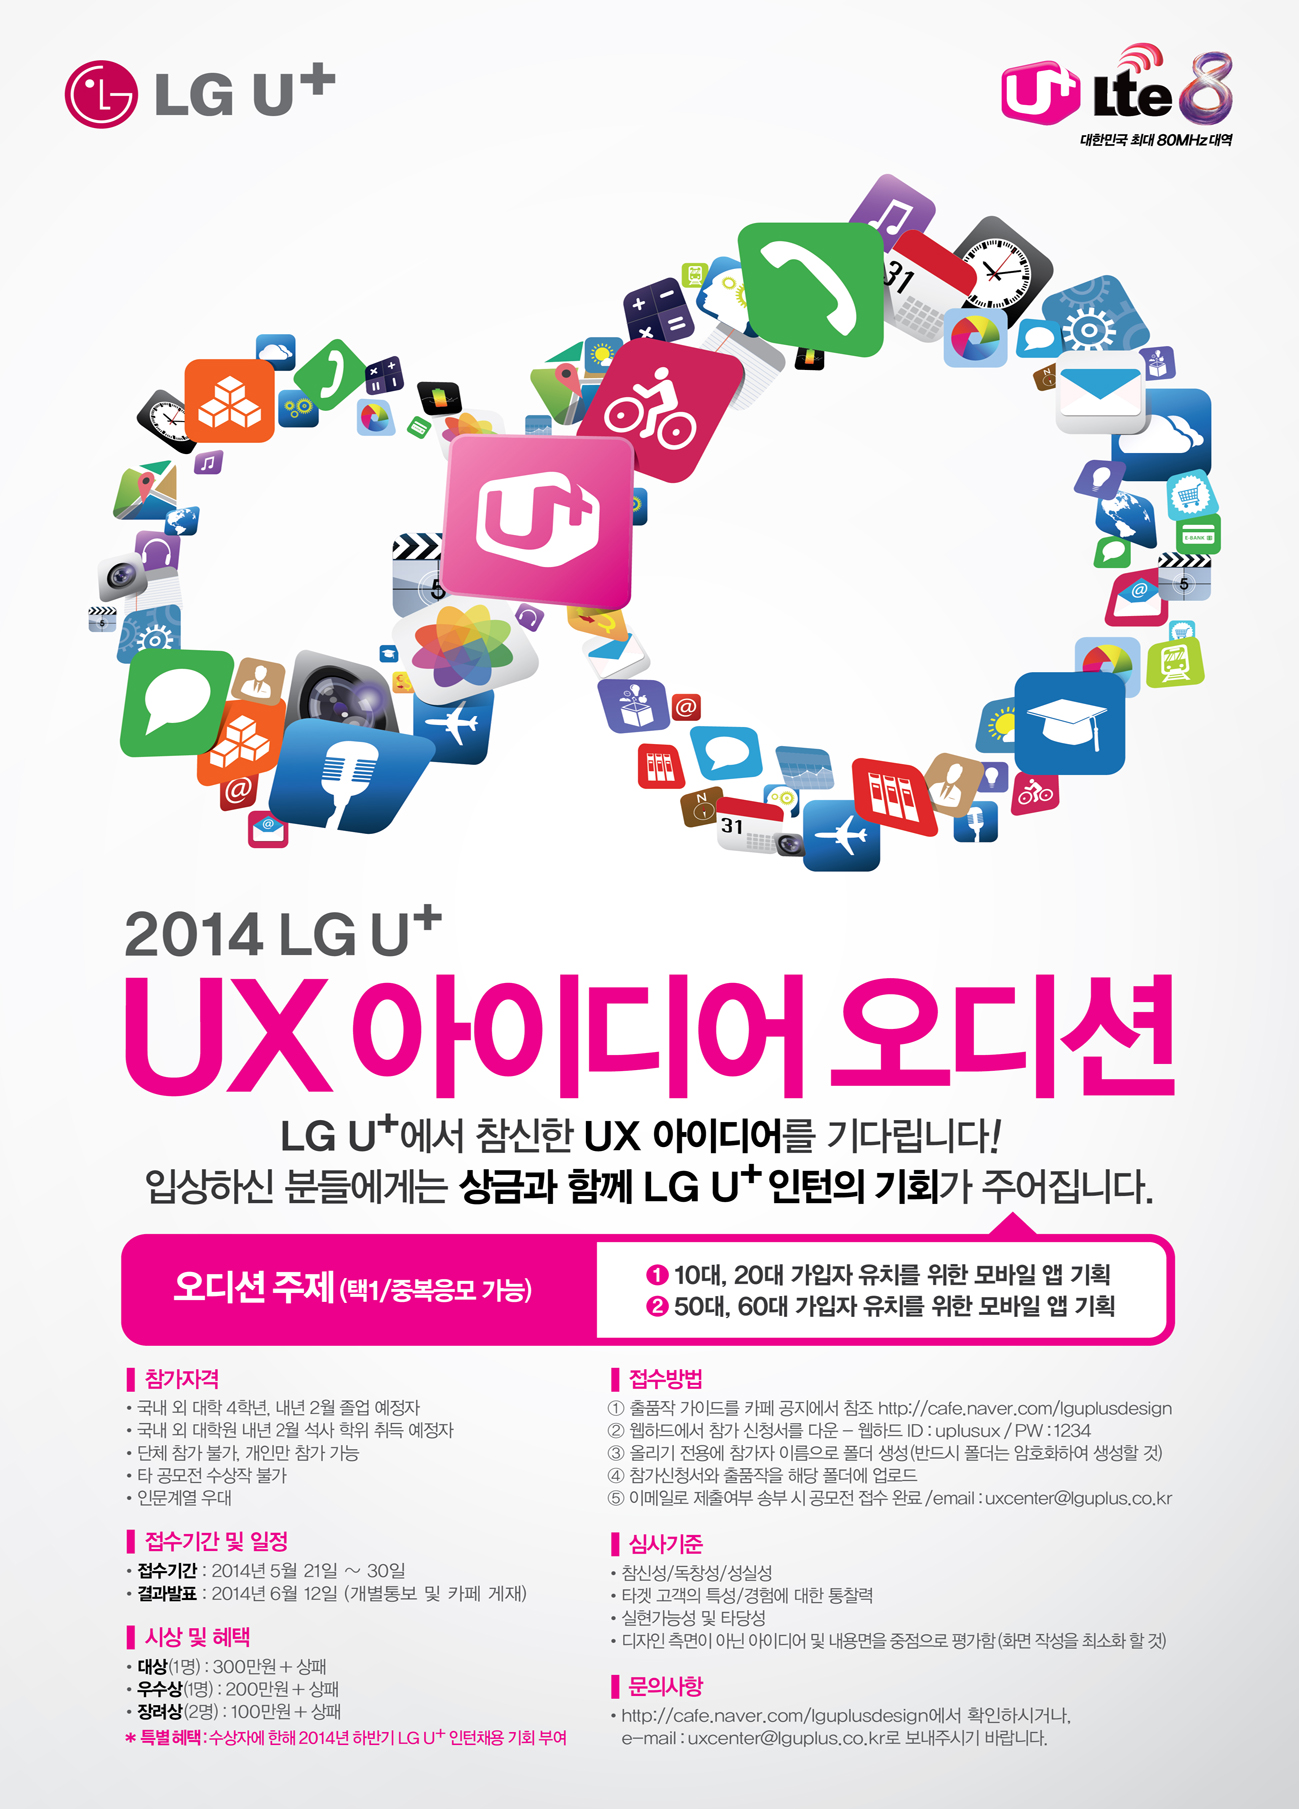 2014 LG U+ UX 아이디어 오디션